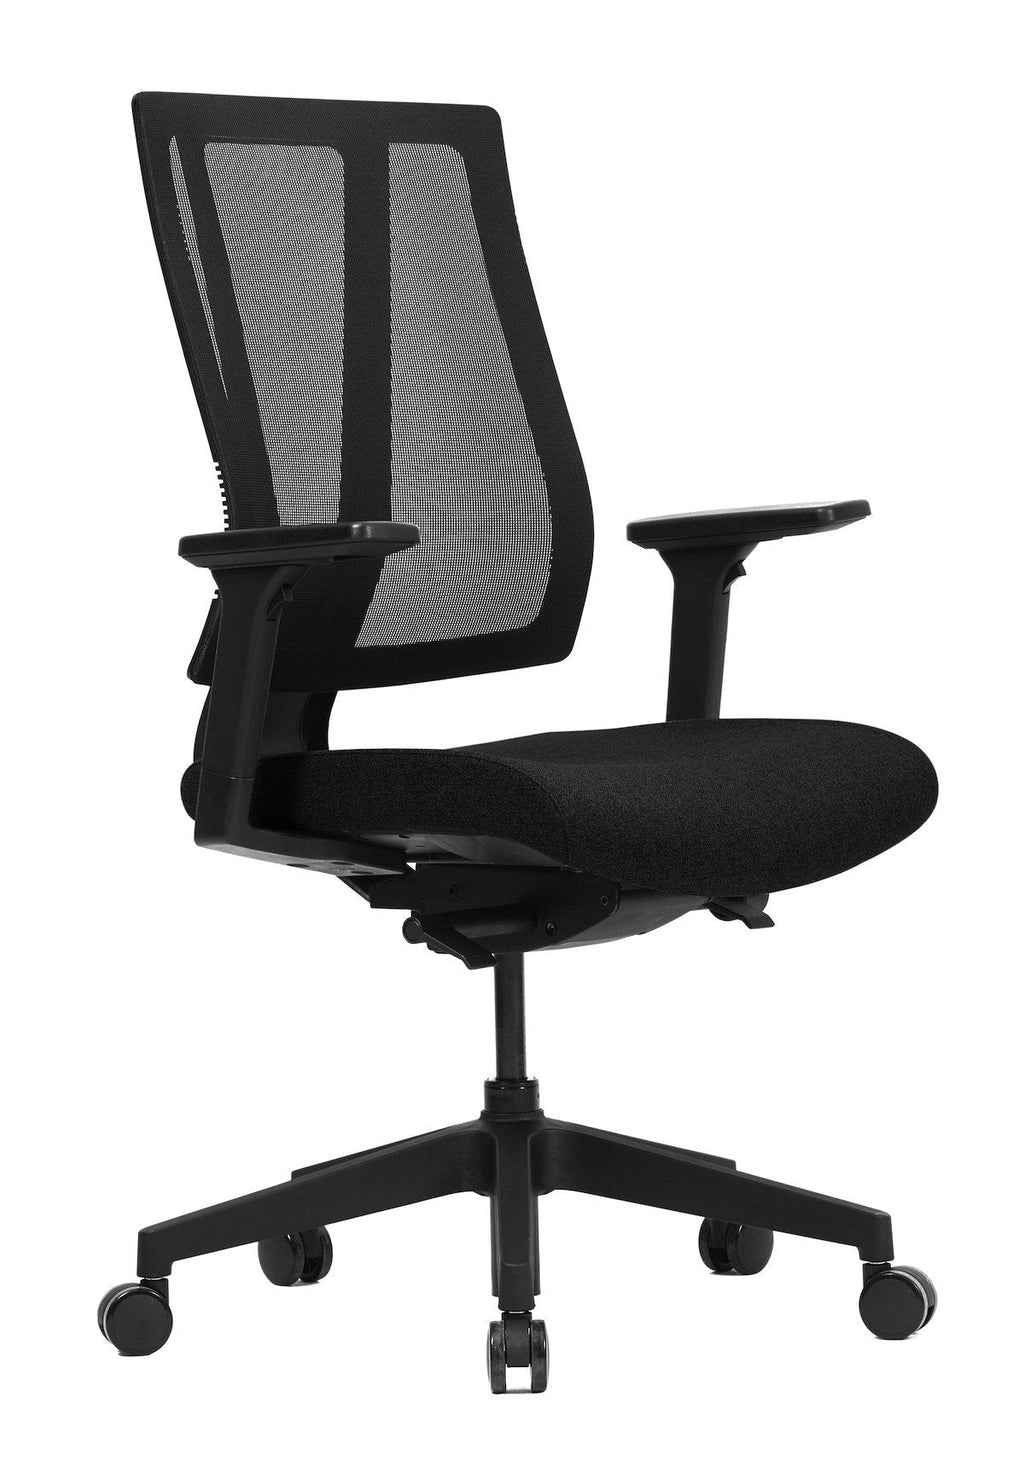 G1 black mesh office chair